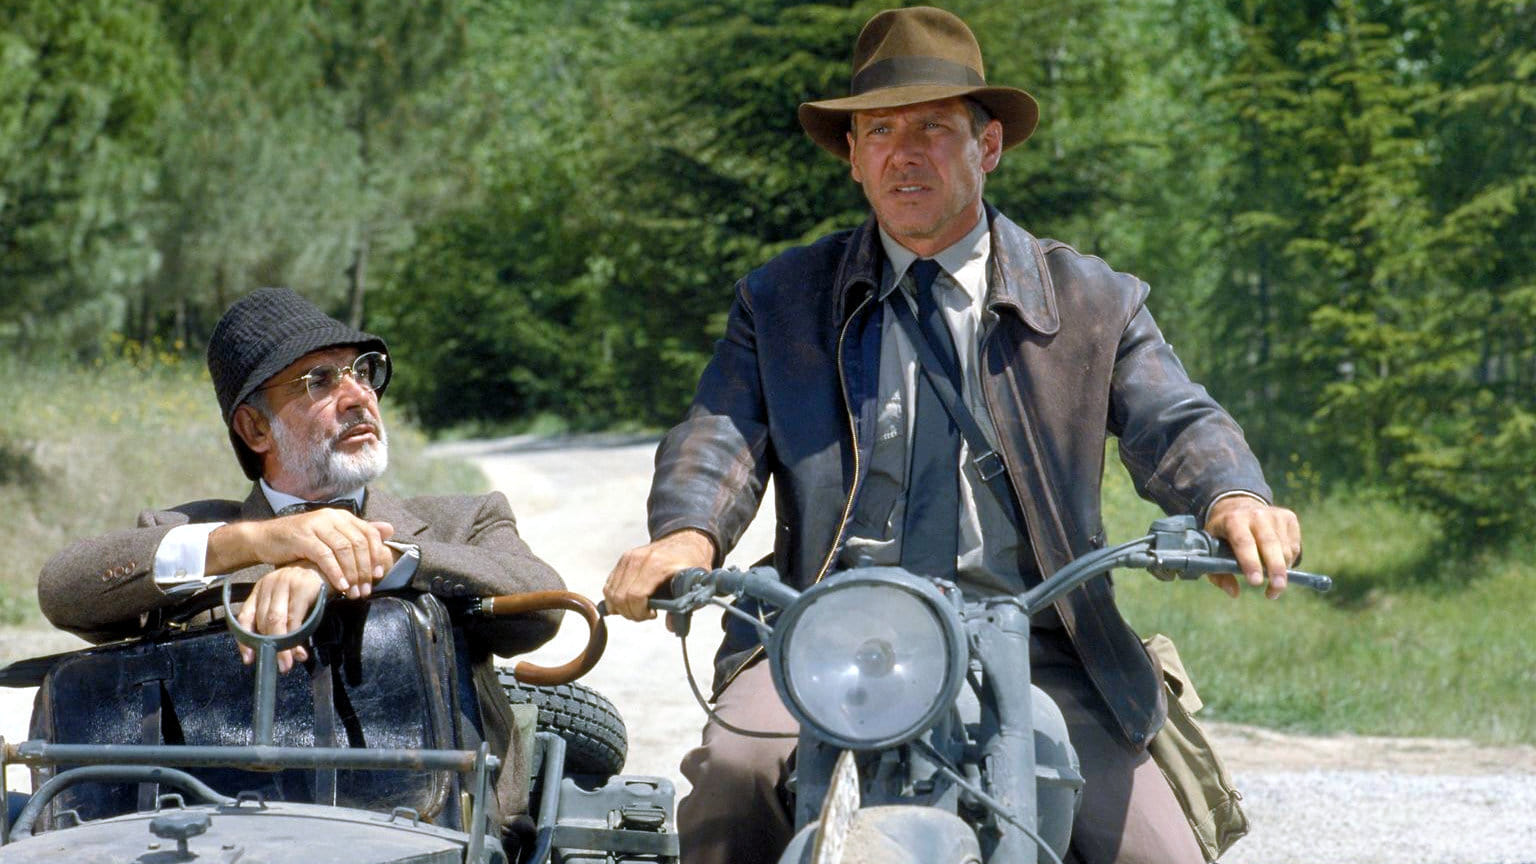 Image du film Indiana Jones et la Dernière Croisade 2nz8khffltzdi7tdfiztu41lolnjpg